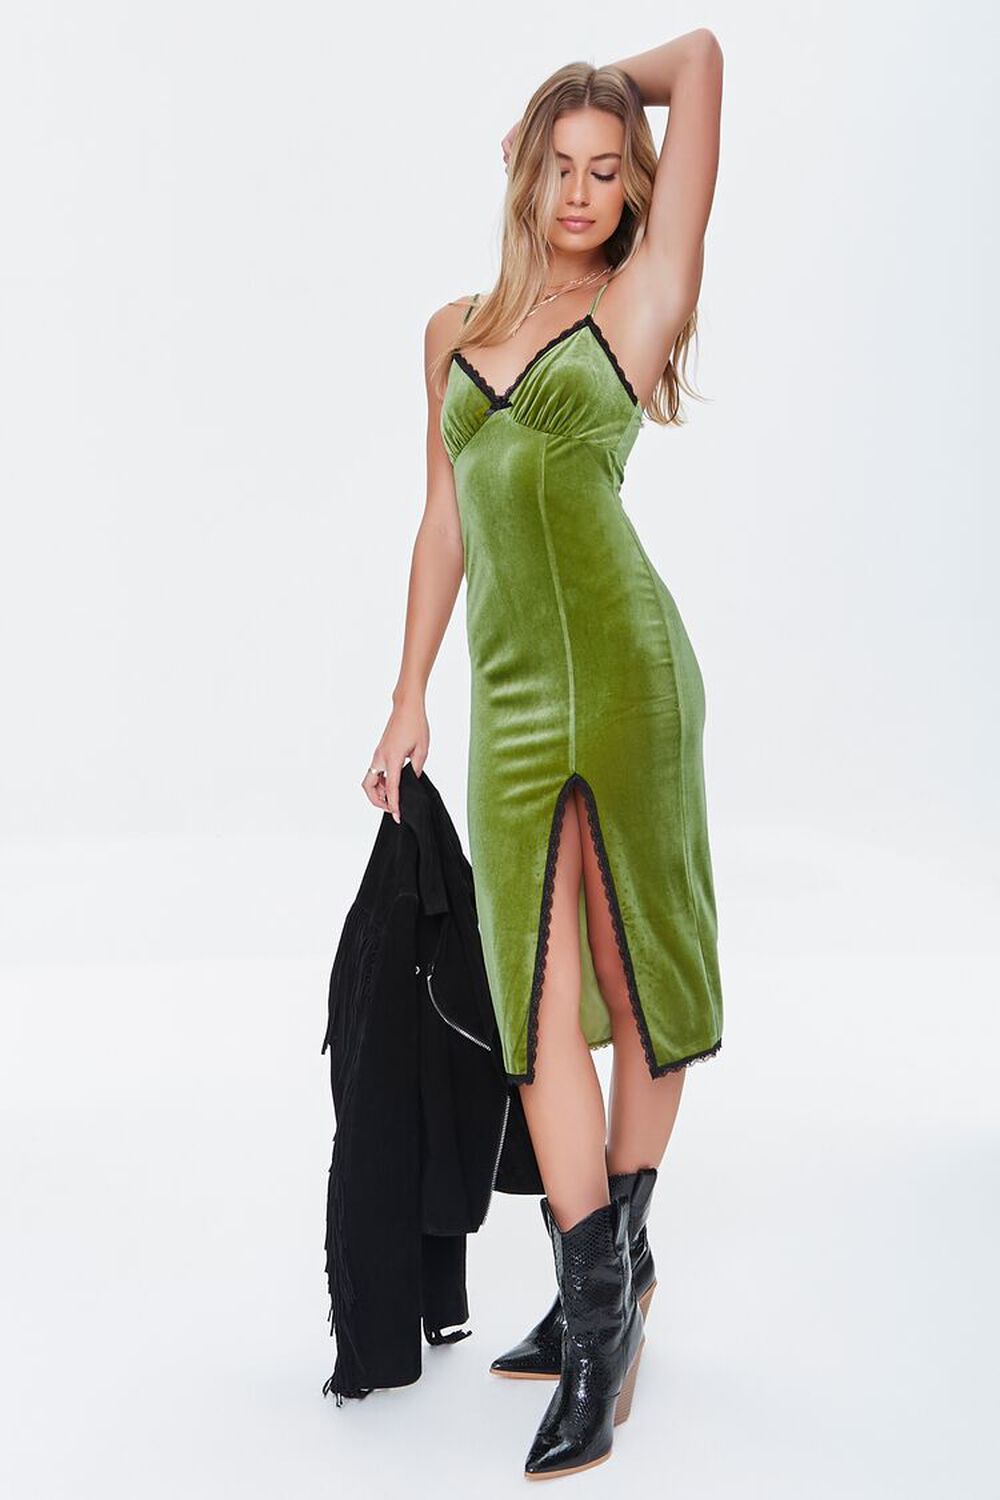 GREEN Velvet Lace-Trim Bodycon Dress, image 1